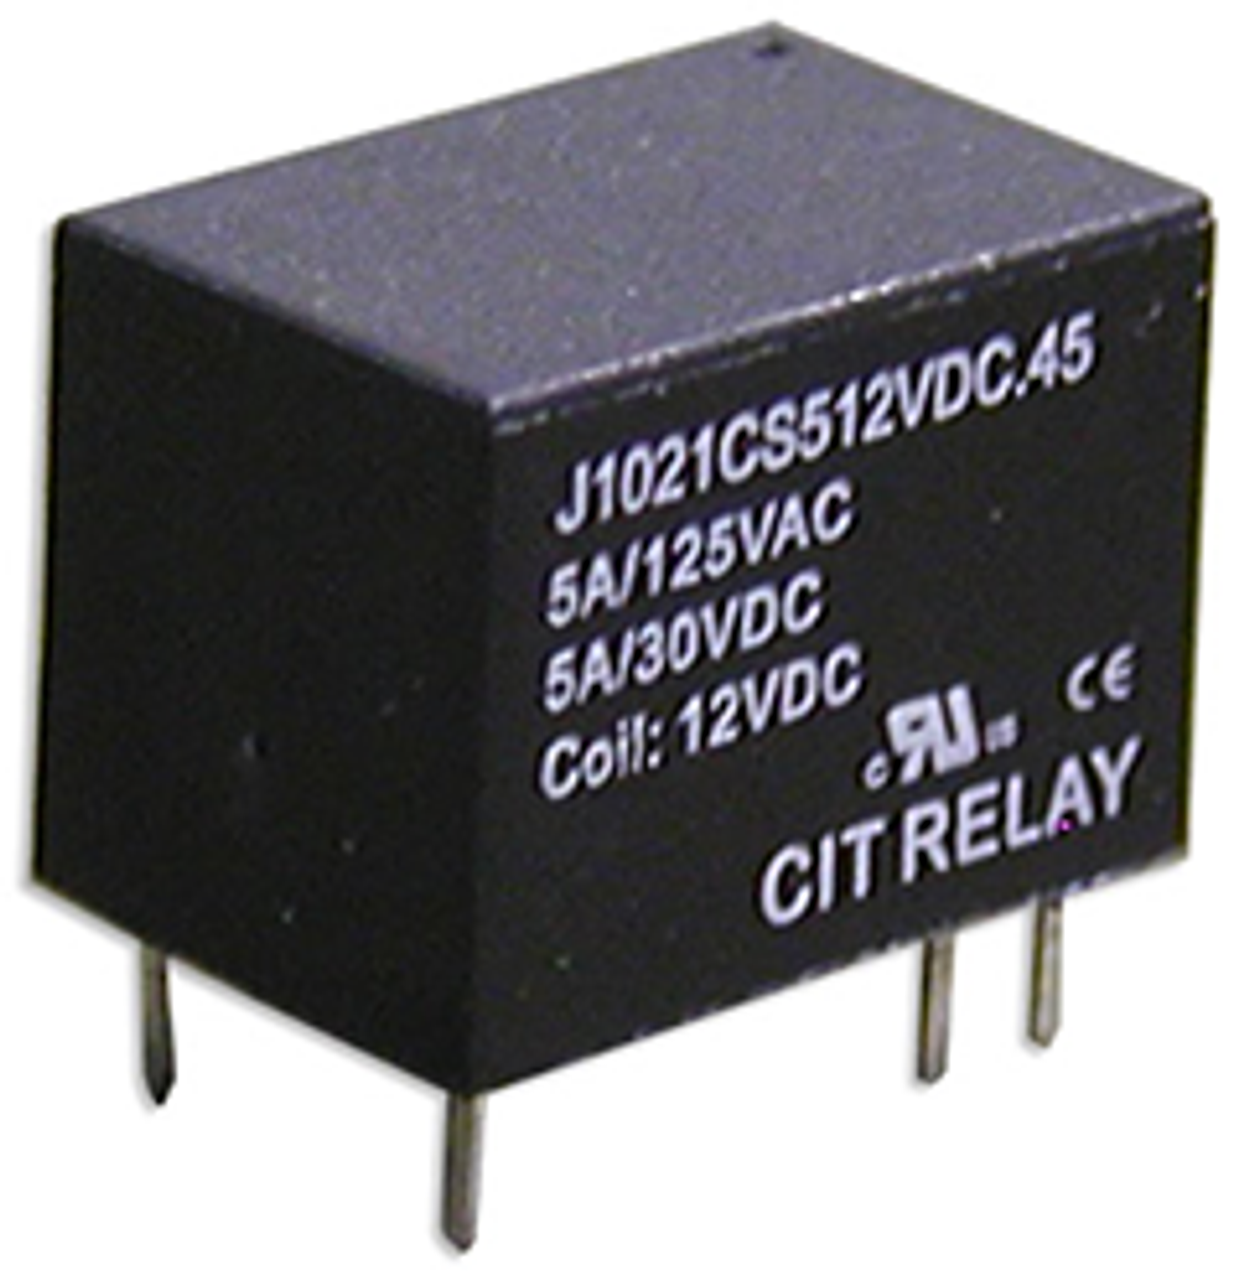 CIT Relay and Switch J1021CS36VDC.20 Power Relays